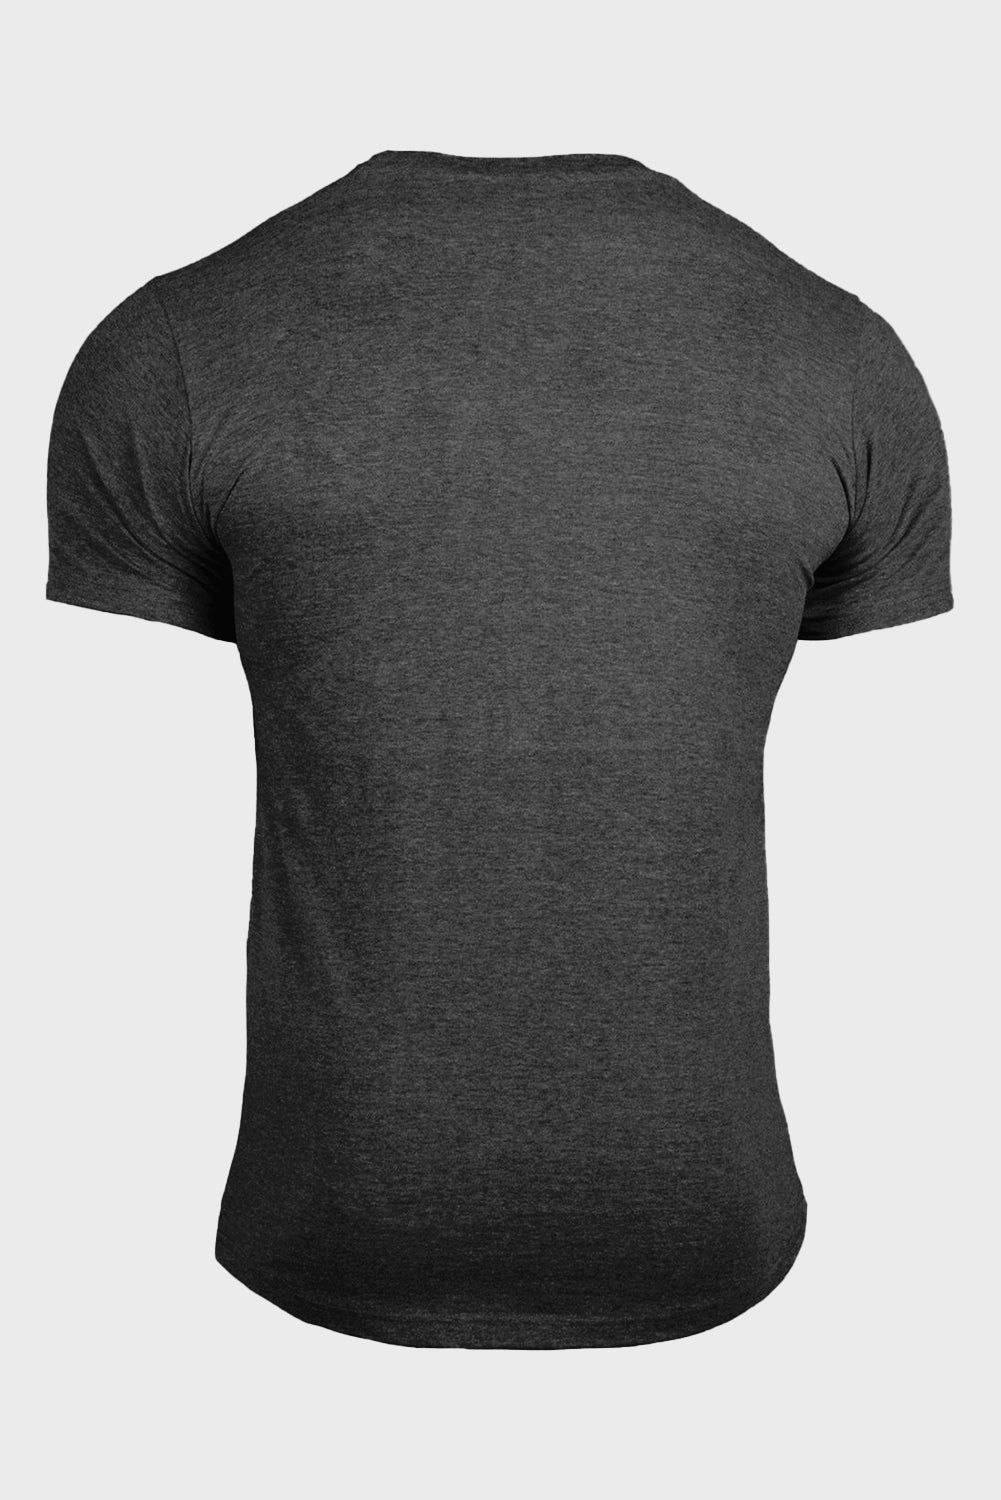 Dark Gray Talk To Me Goose American Flag Graphic Print Men's T Shirt Men's Tops JT's Designer Fashion